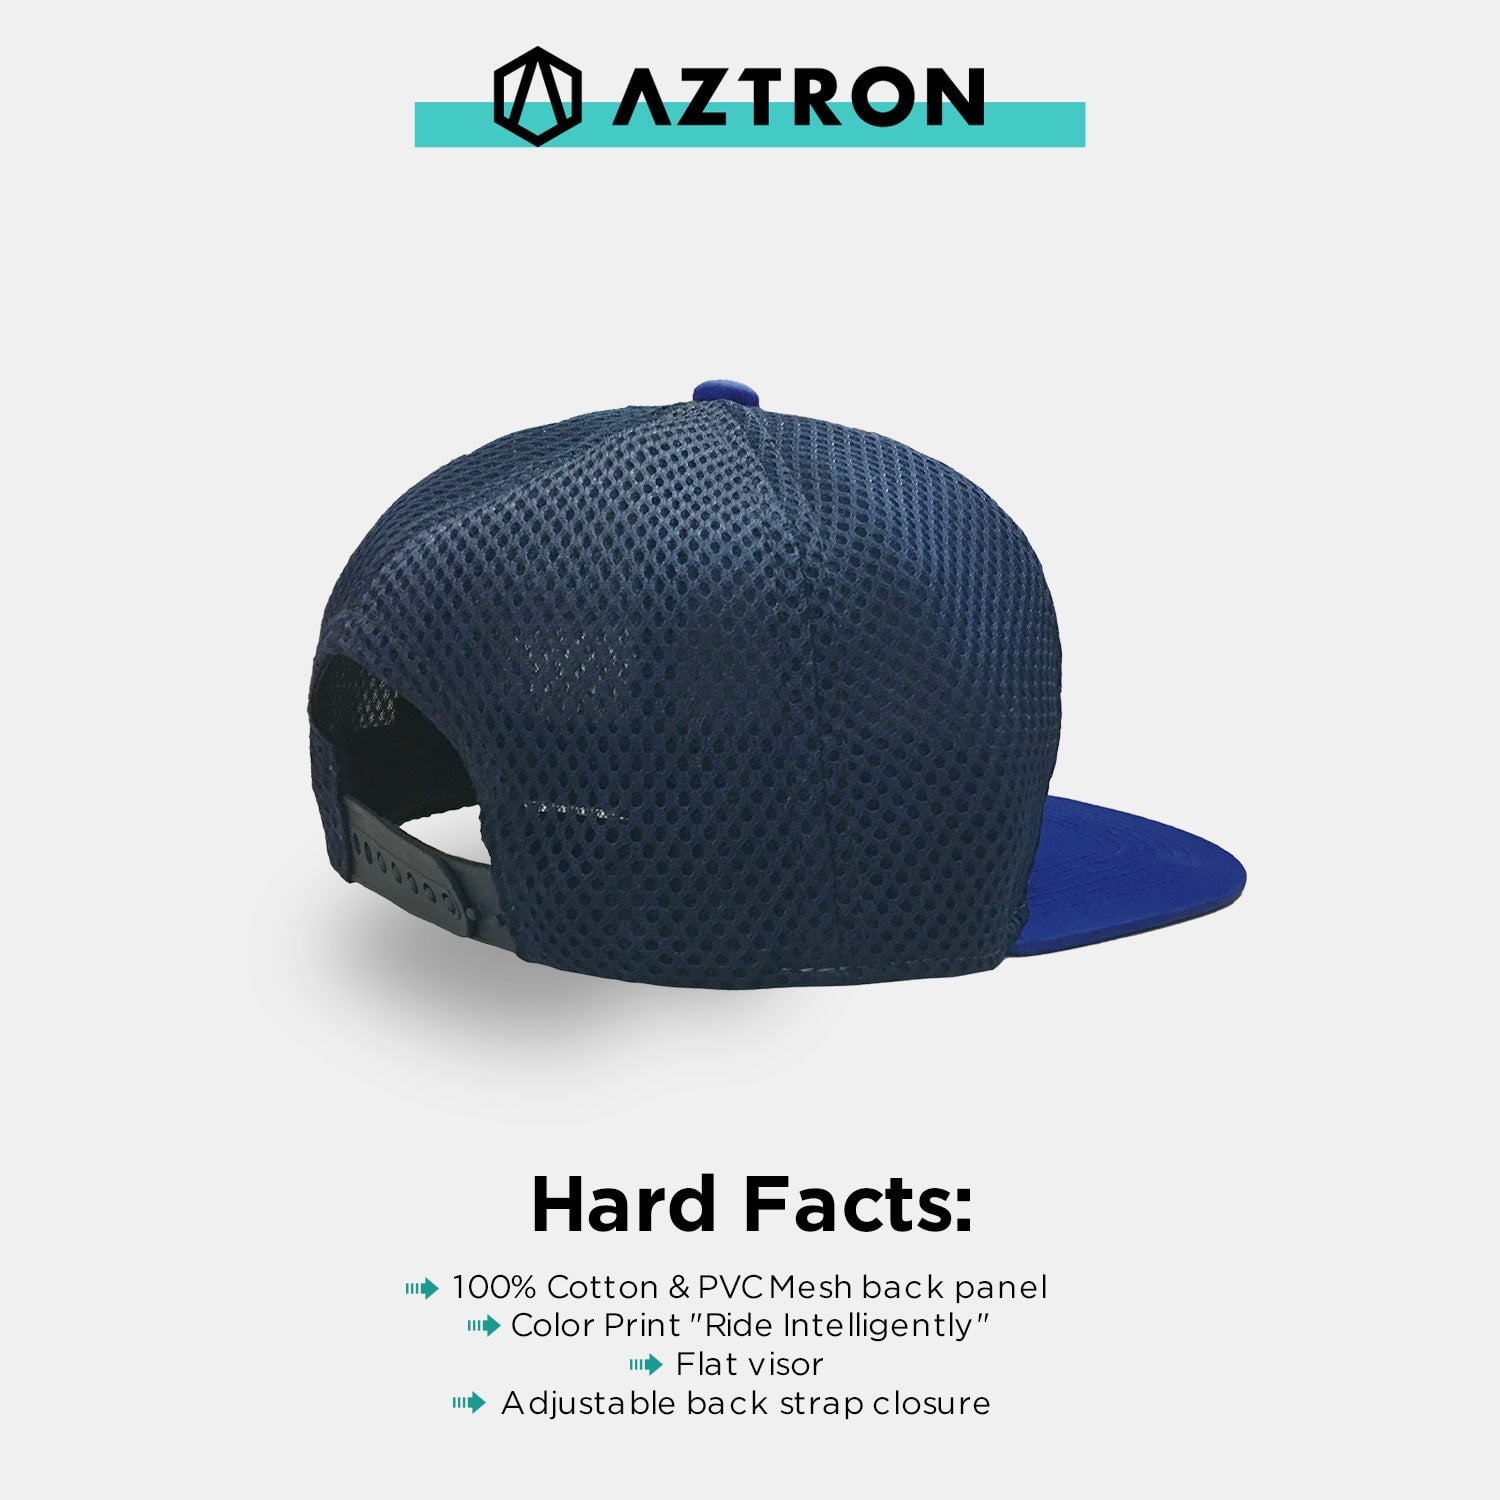 AZTRON Icon Cap, blue, Kappe, Baseball Cap, SUP Cap, Trucker Cap